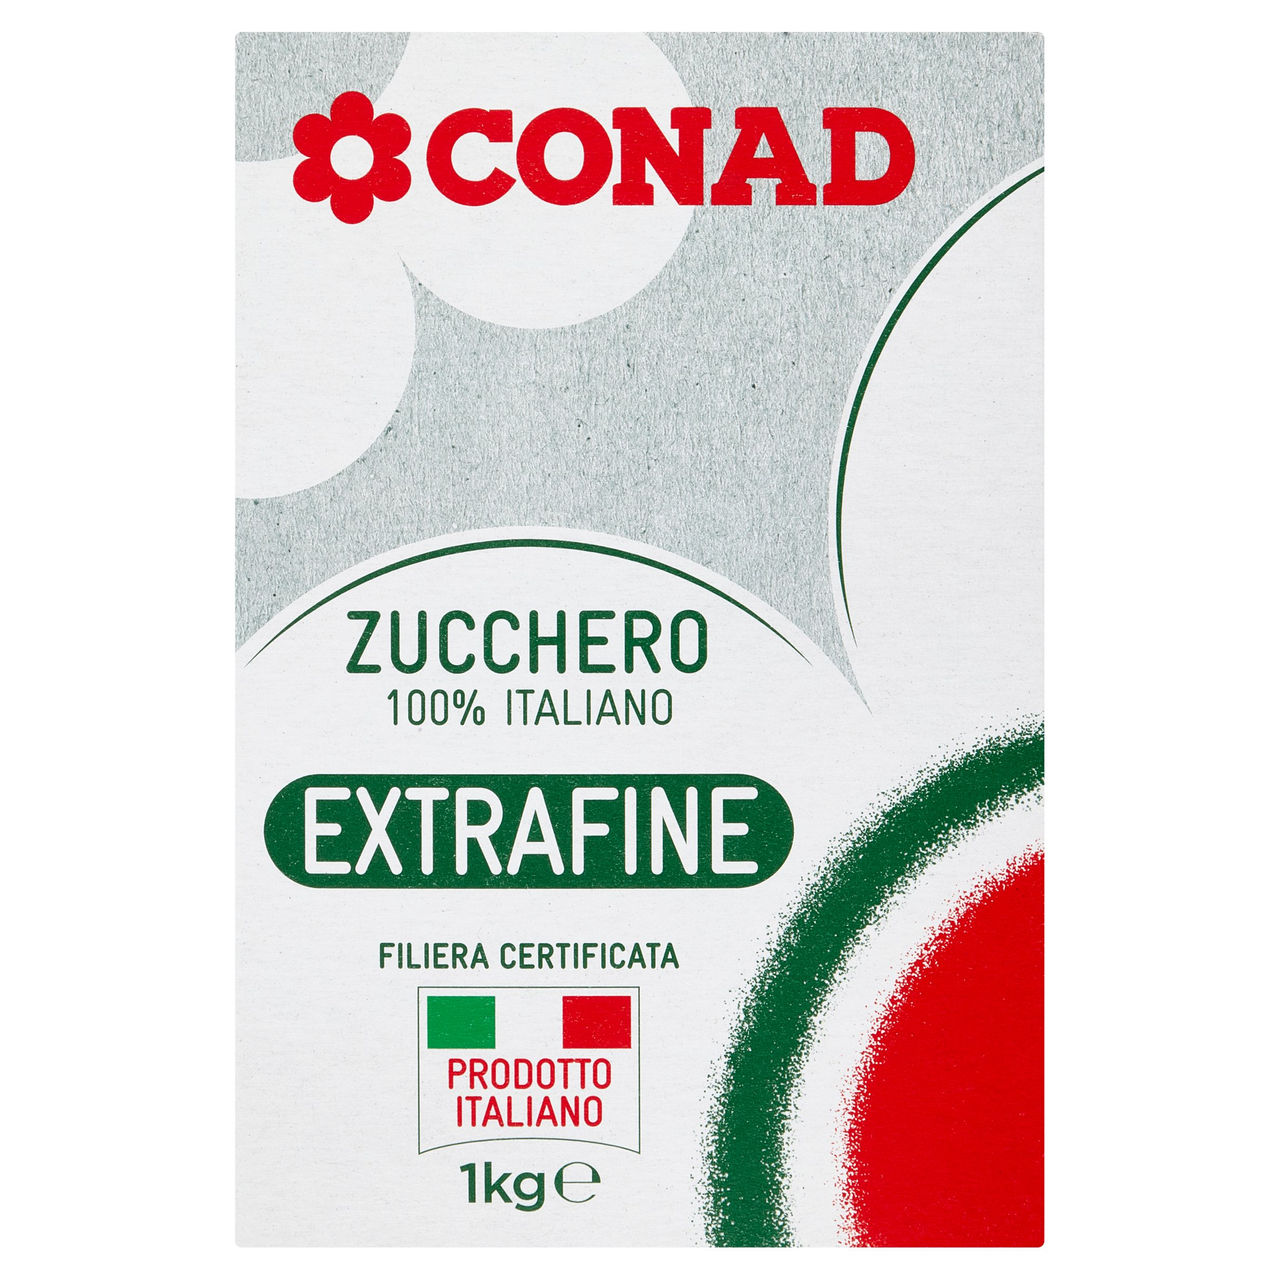 Zucchero 100 italiano extrafine 1kg Conad